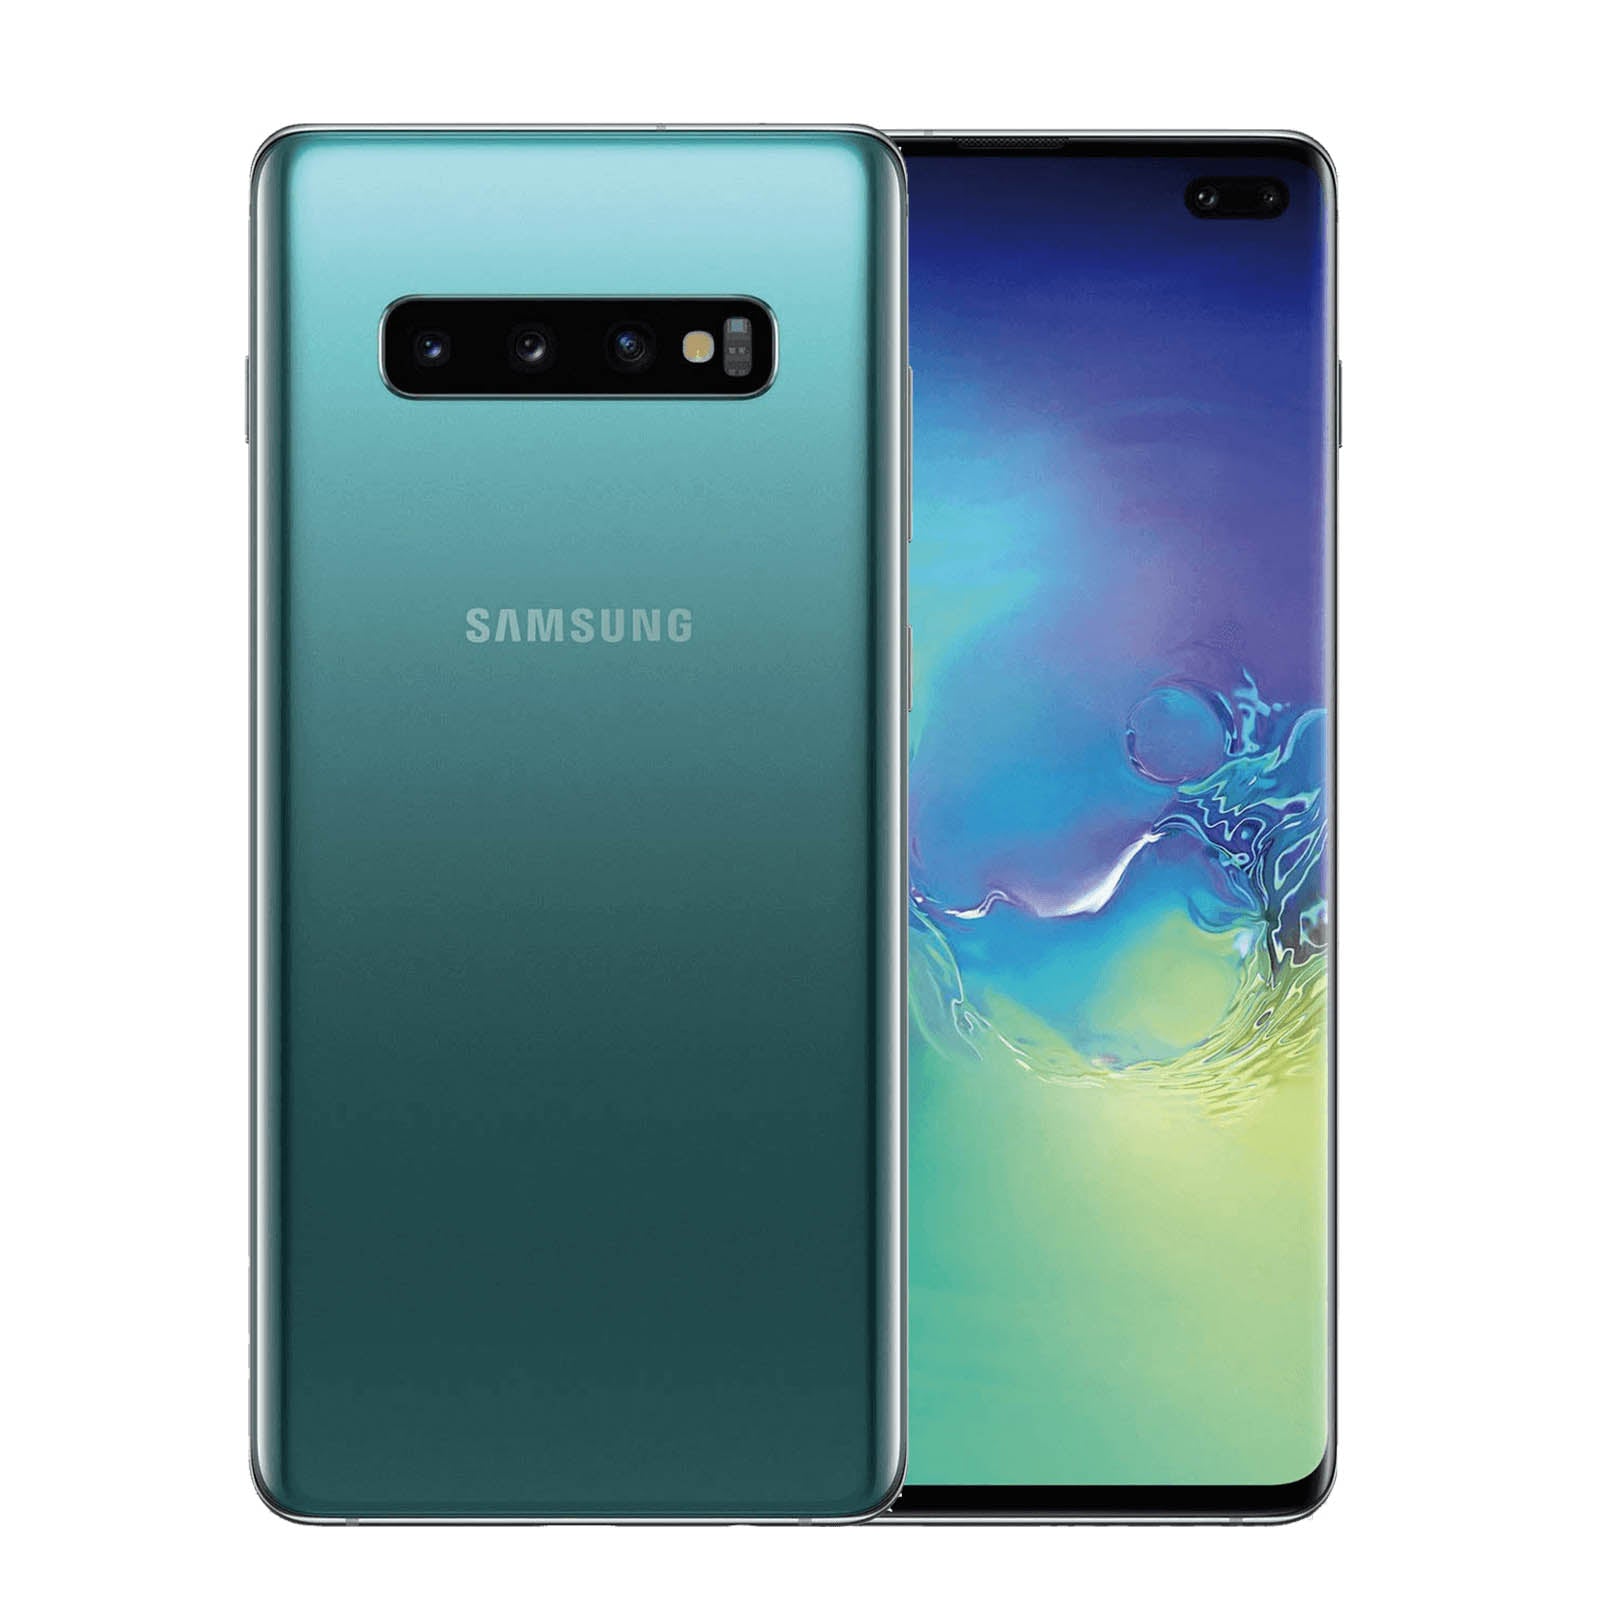 Samsung Galaxy S10 512GB Prism Green Good - Unlocked